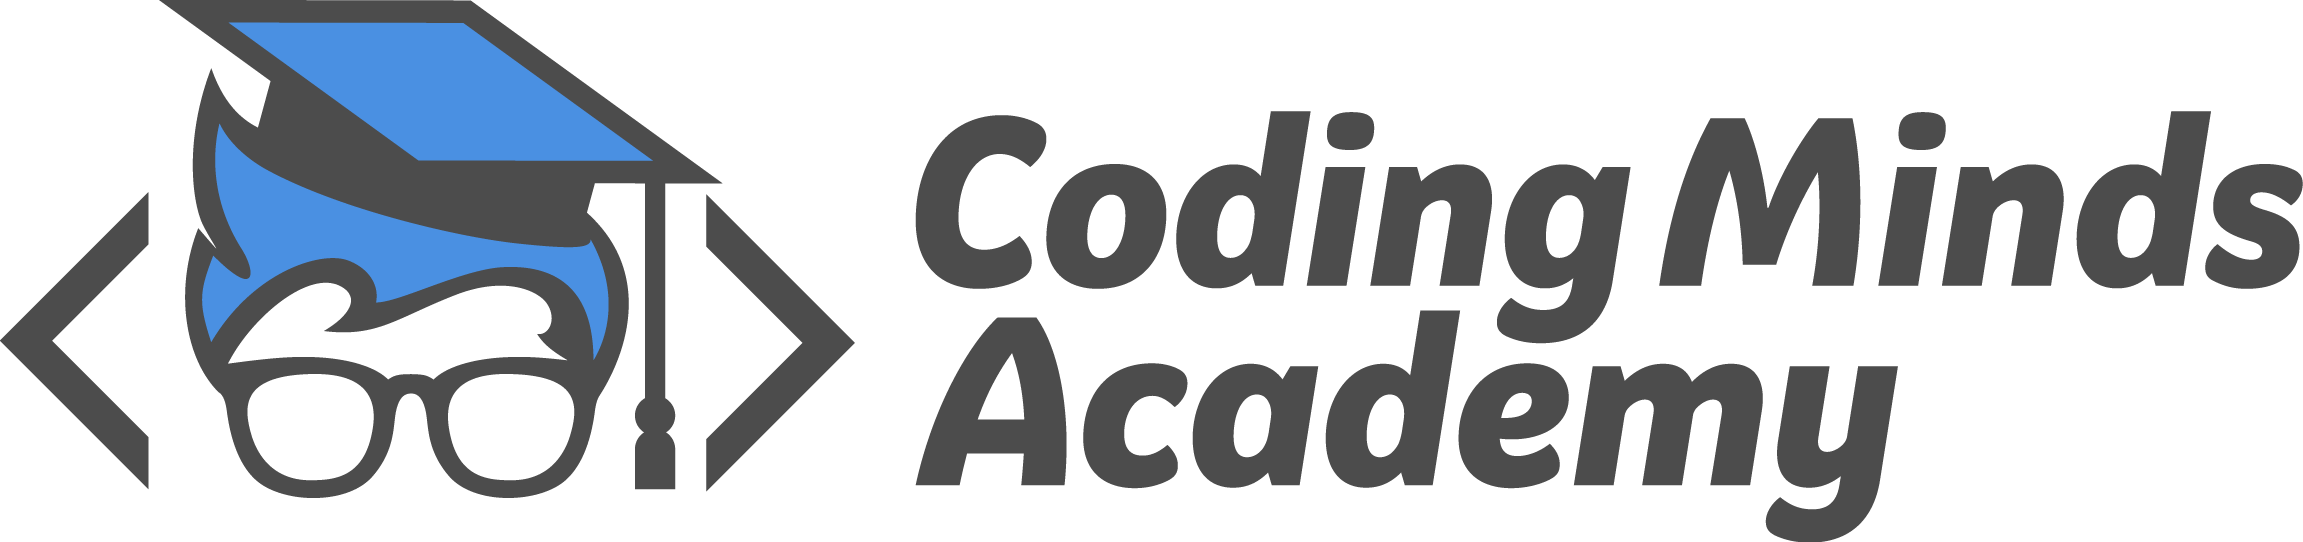 Программирование логотип. Код логотип. Кодинг лого. Эволюционное программирование логотип. Codify